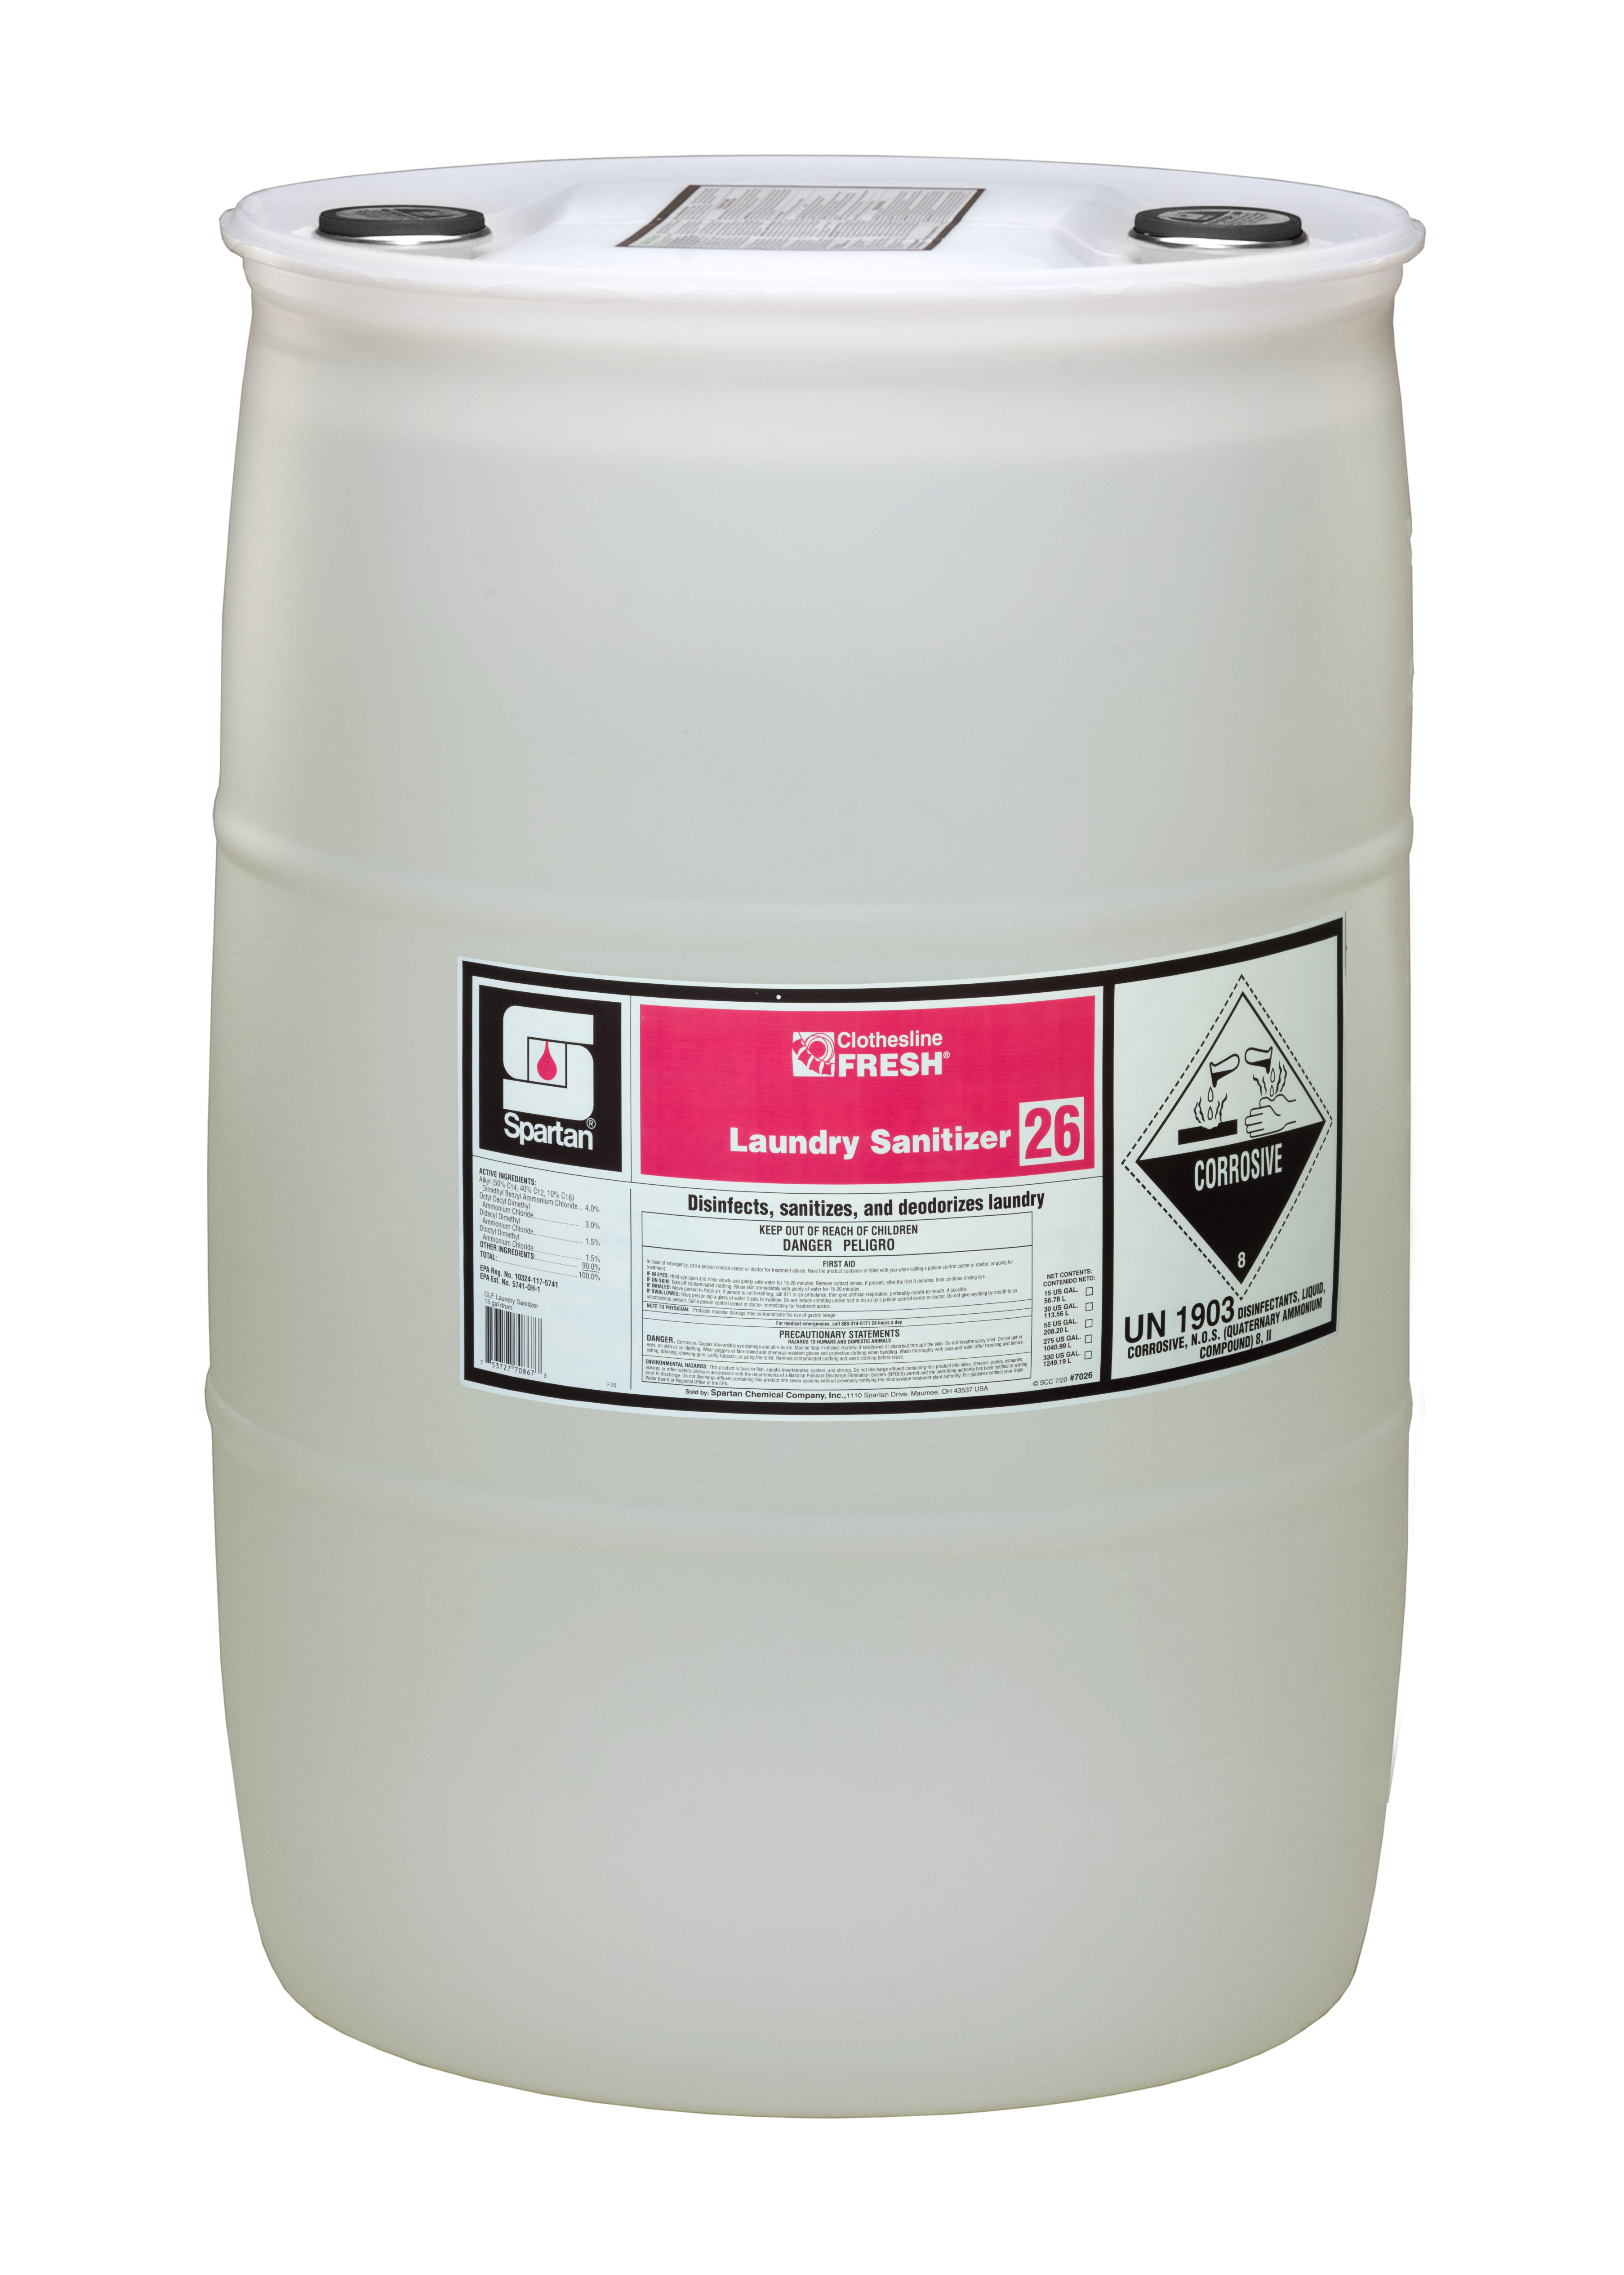 Spartan Chemical Company Clothesline Fresh Laundry Sanitizer 26, 55 gallon drum